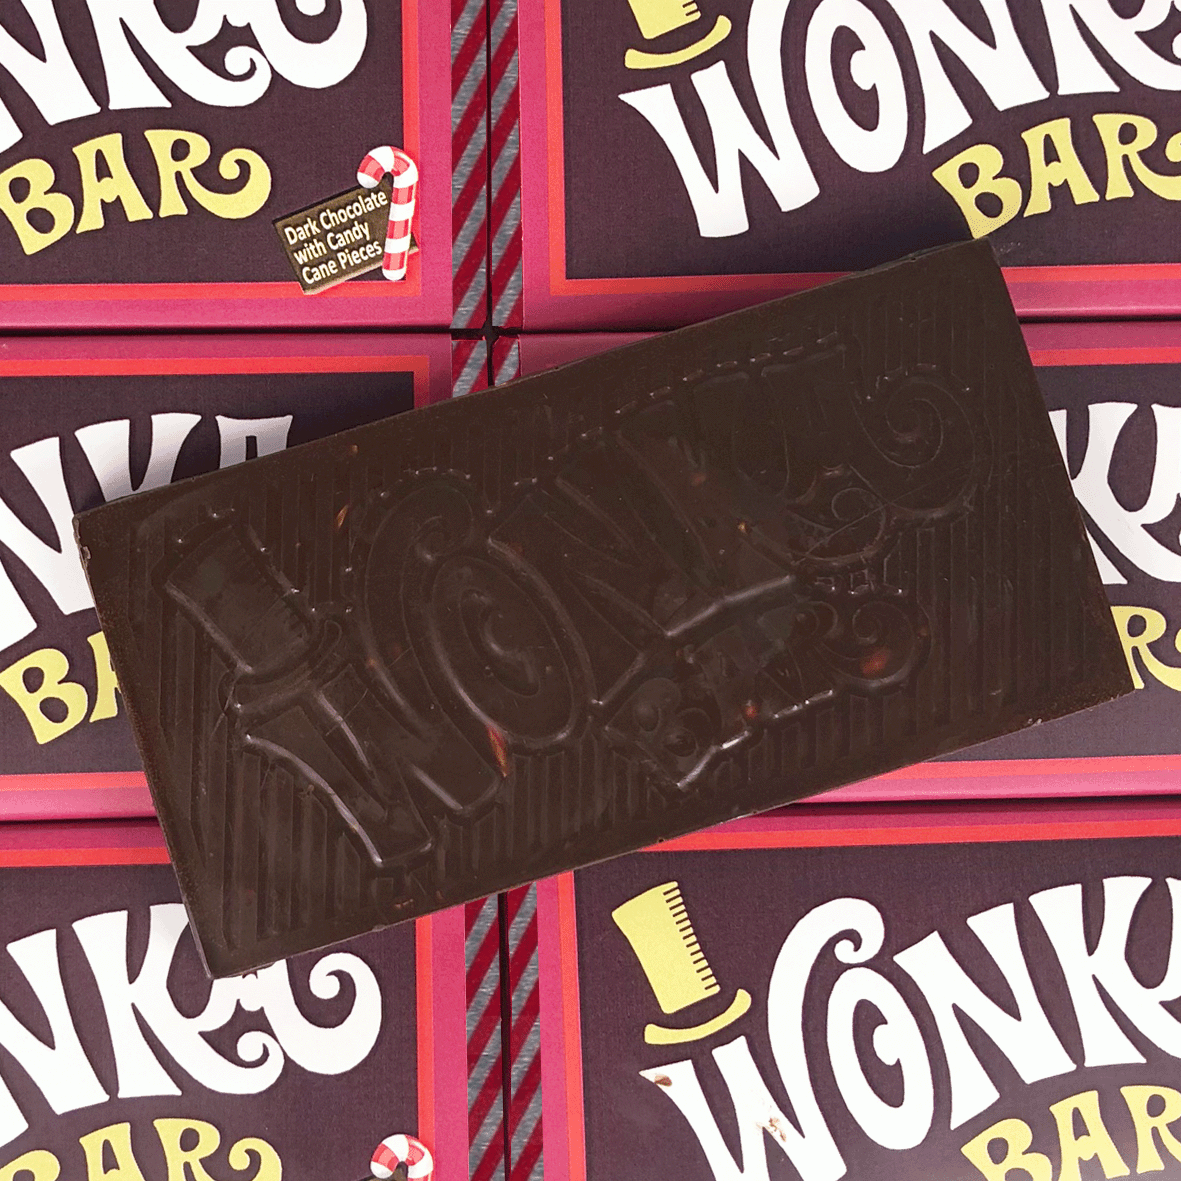 Wonka Bar 50g Edible Dark Chocolate With Candy Cane Pieces Bar